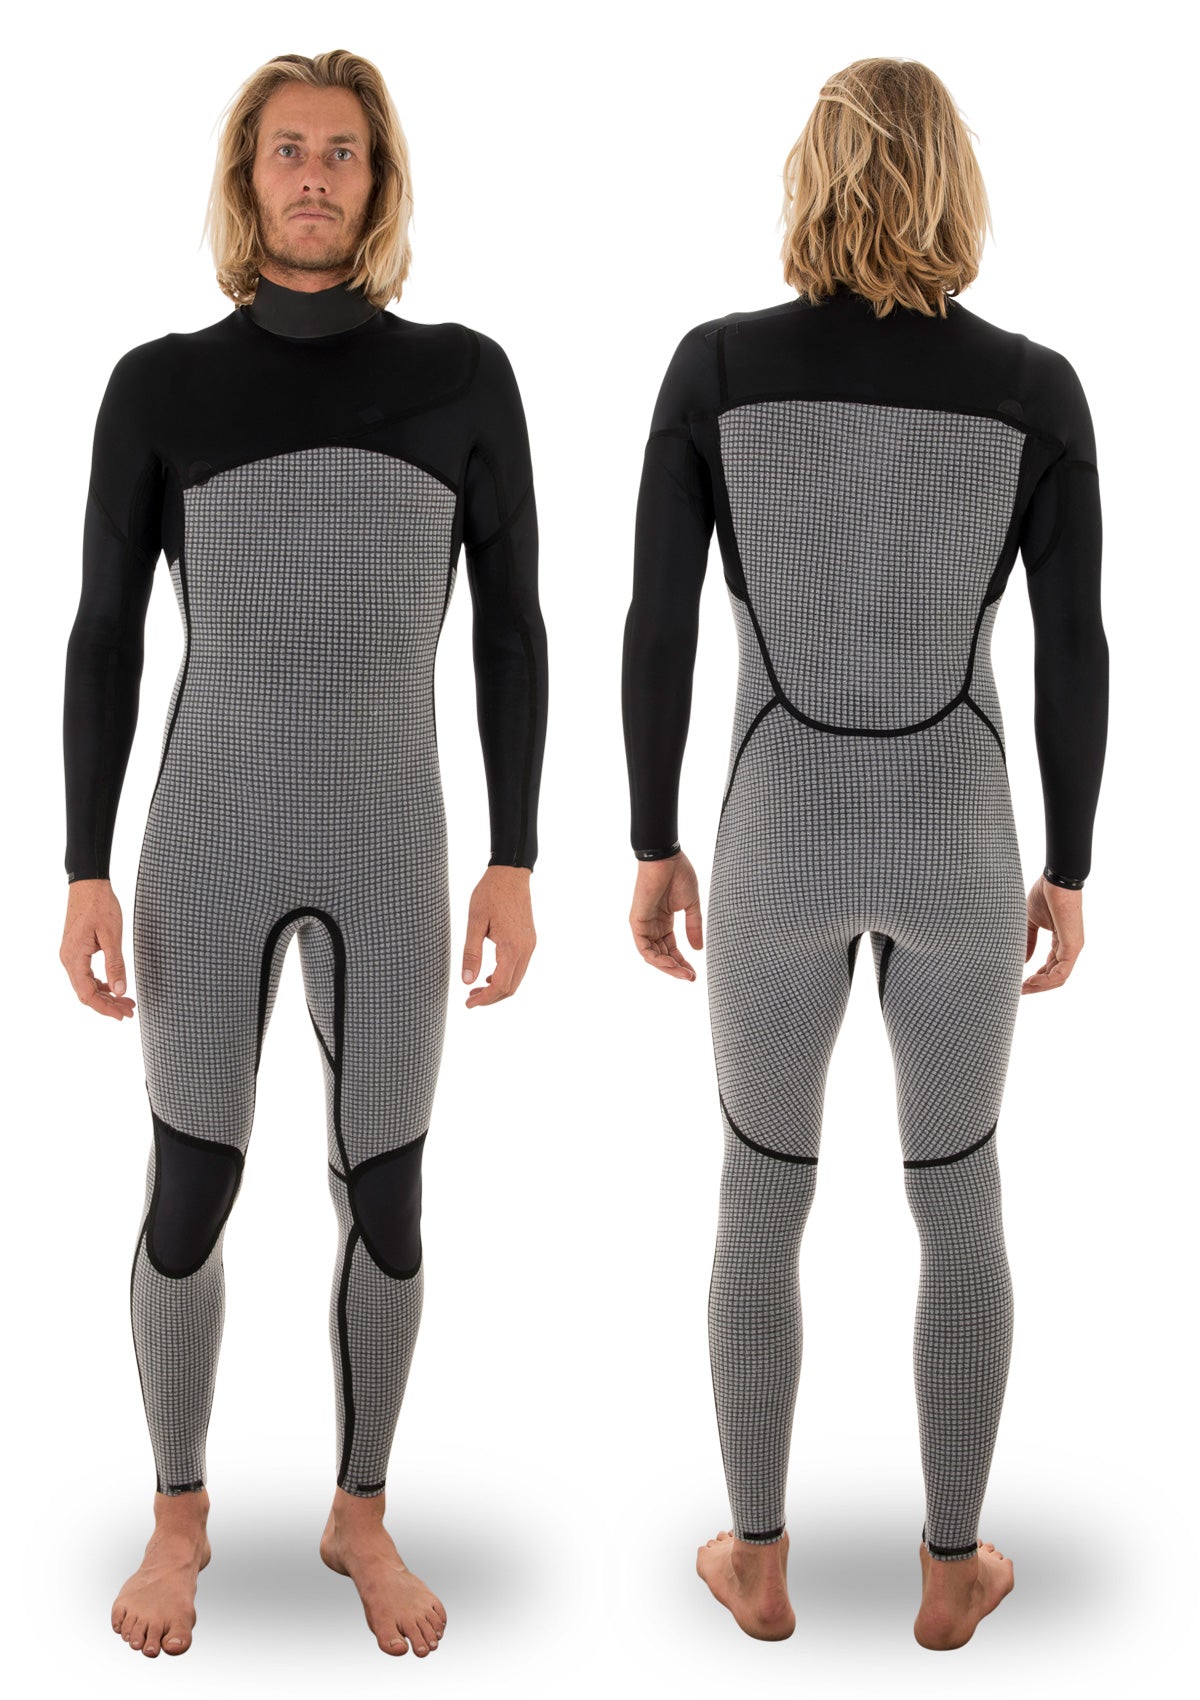 needessentials 4/3 liquid taped thermal wetsuit torren martyn surfing winter